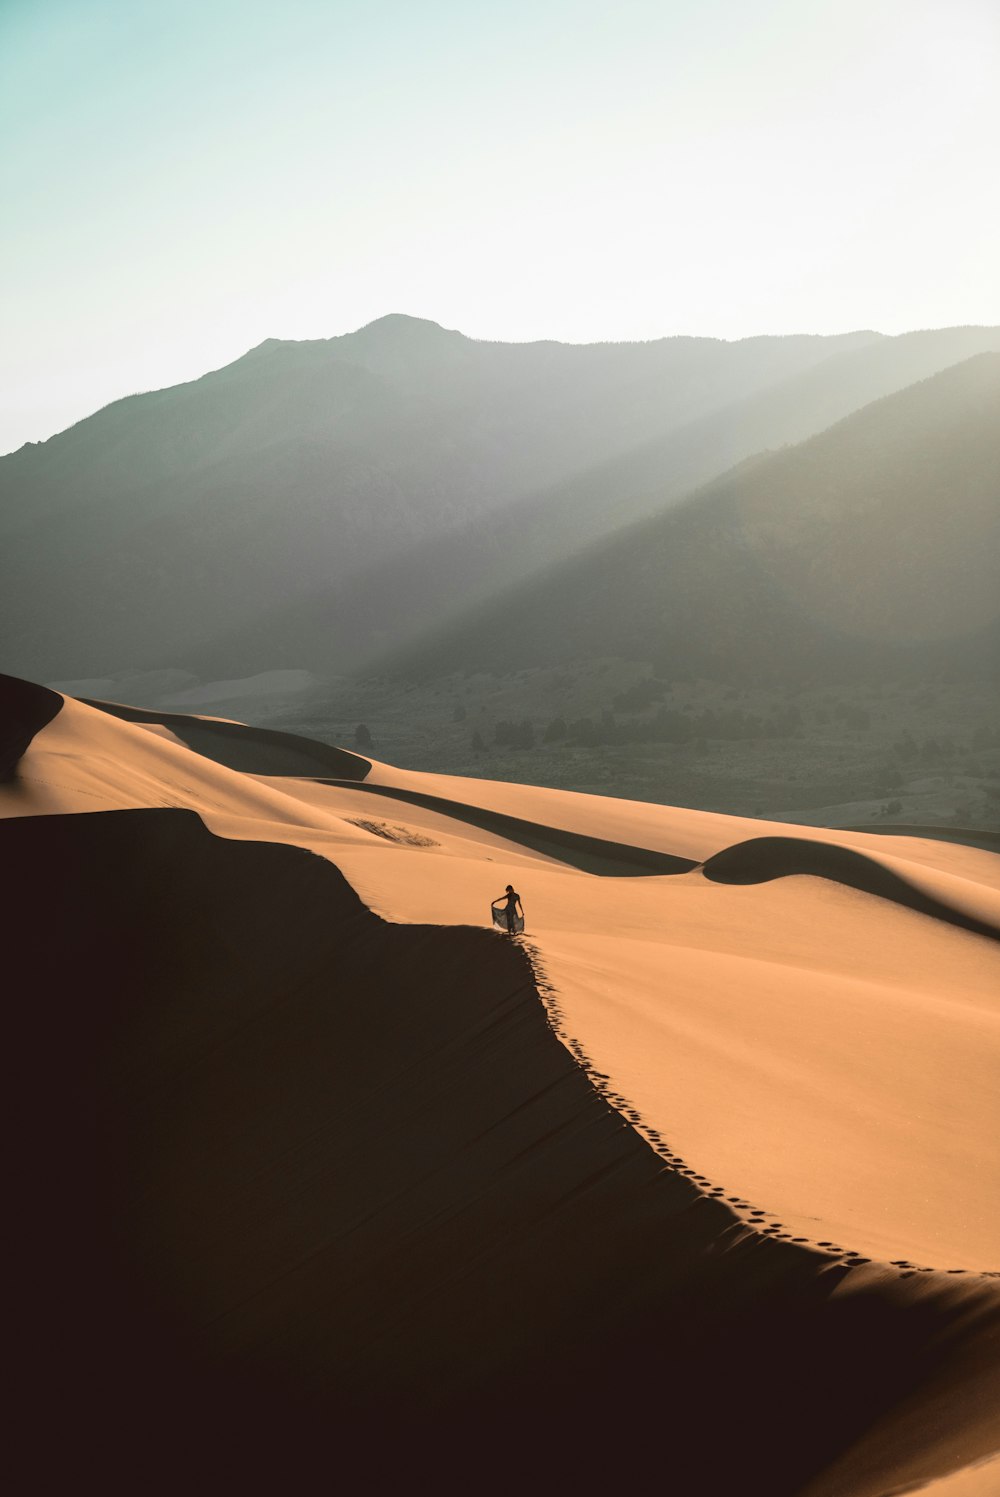 person walking on desert